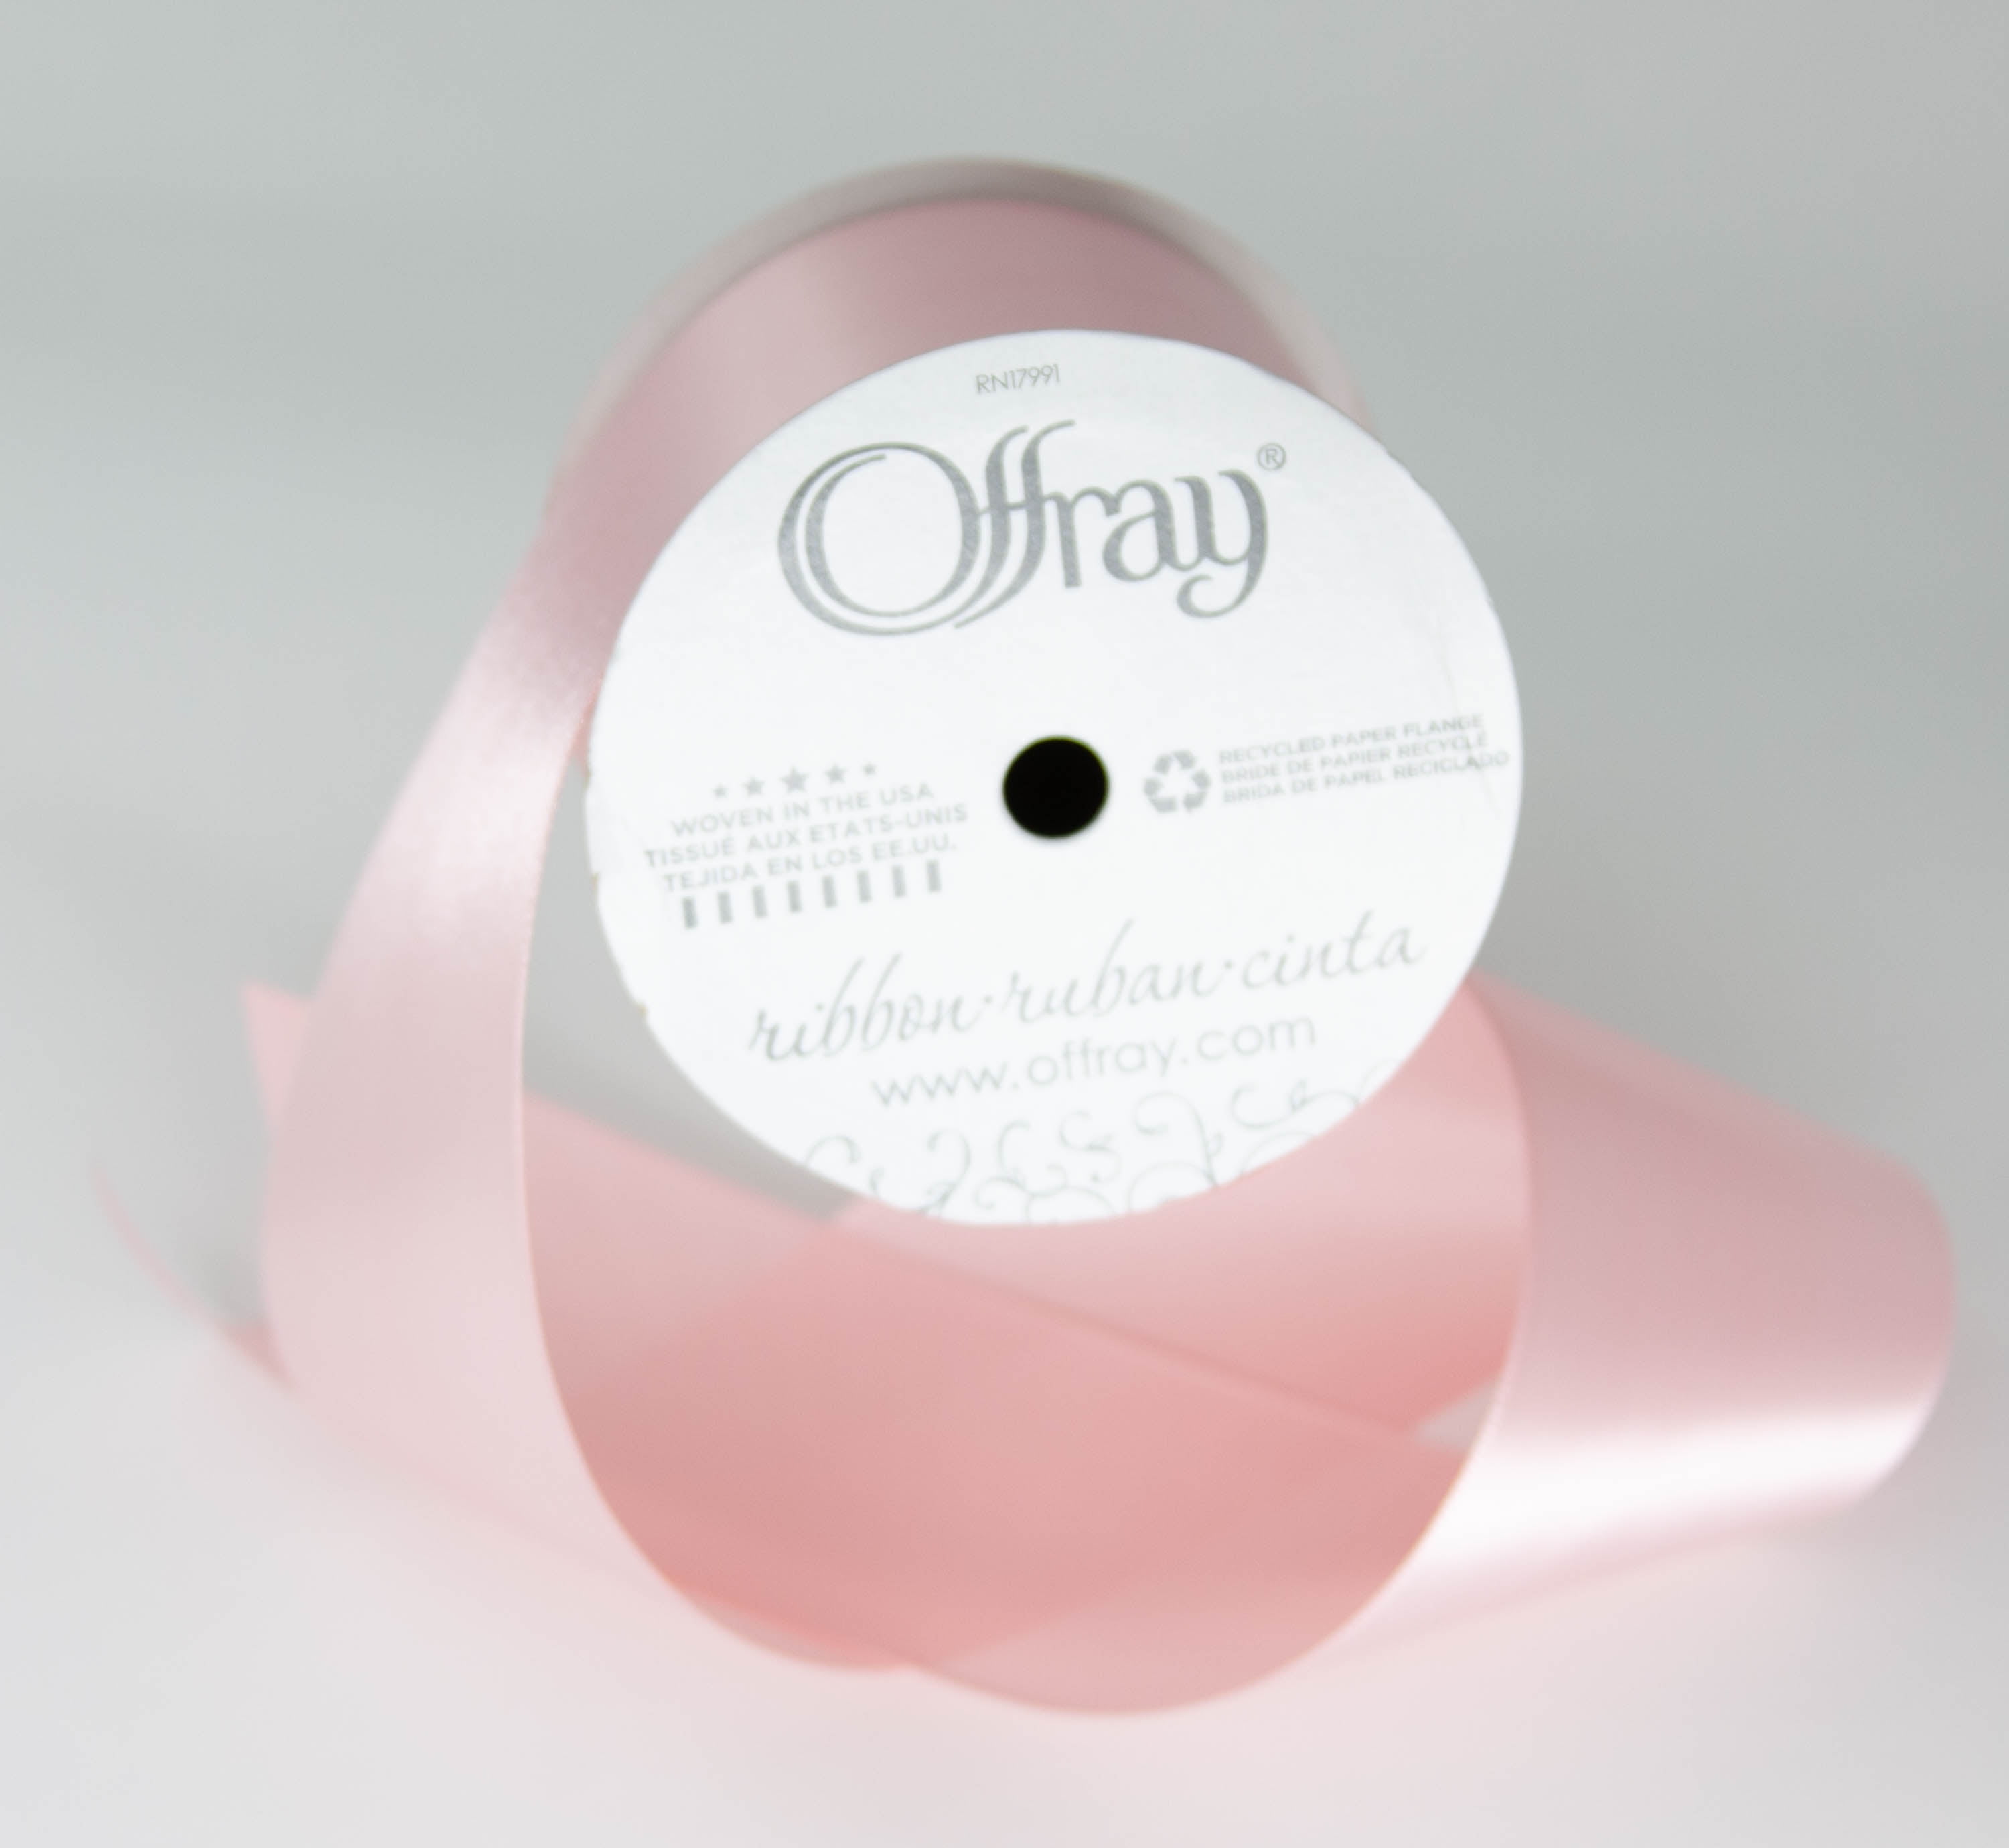 TONIFUL 1-12 Inch (40mm) x 100 Yards Baby Pink Wide Satin Ribbon Solid  Fabric Ribbon